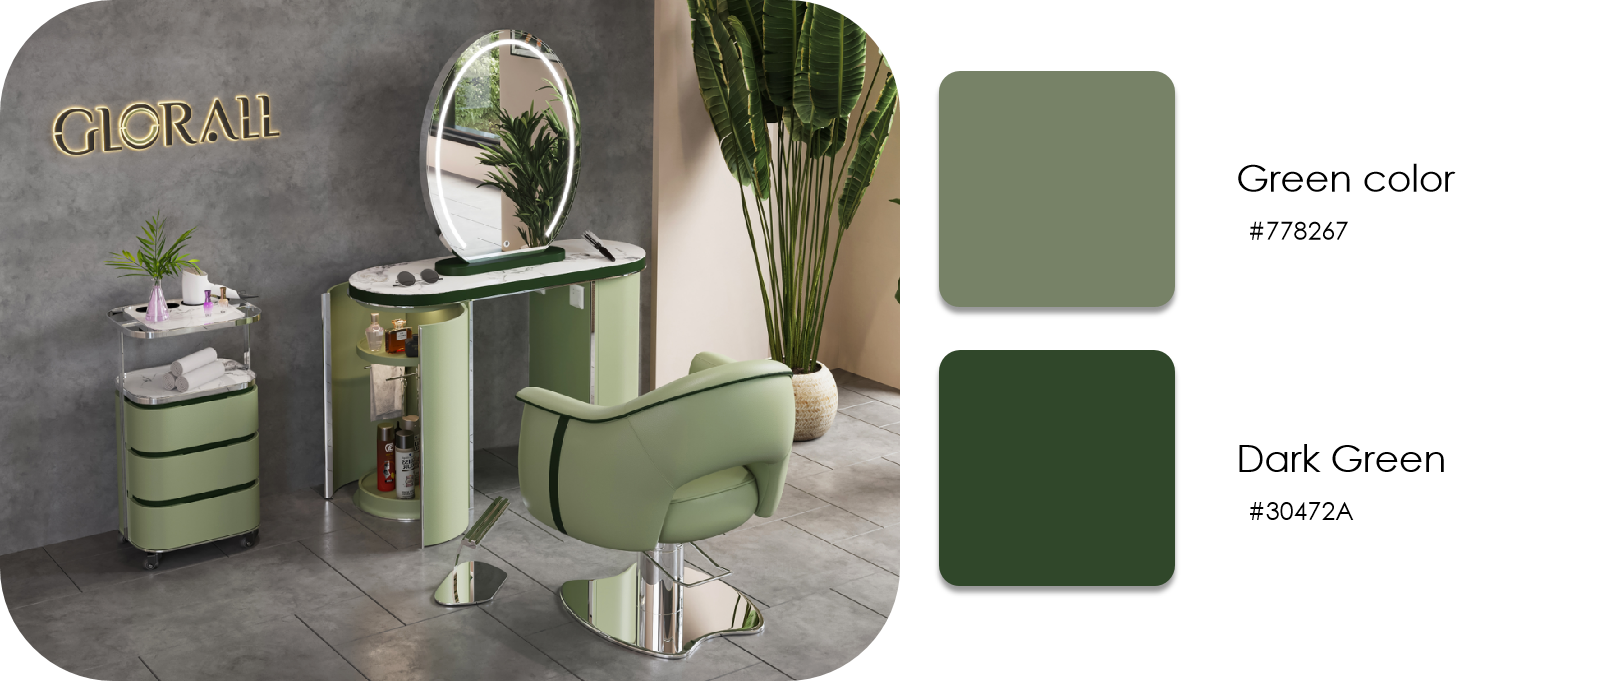 Glorall green salon mirror station for hair salon beauty makeup studio (1)